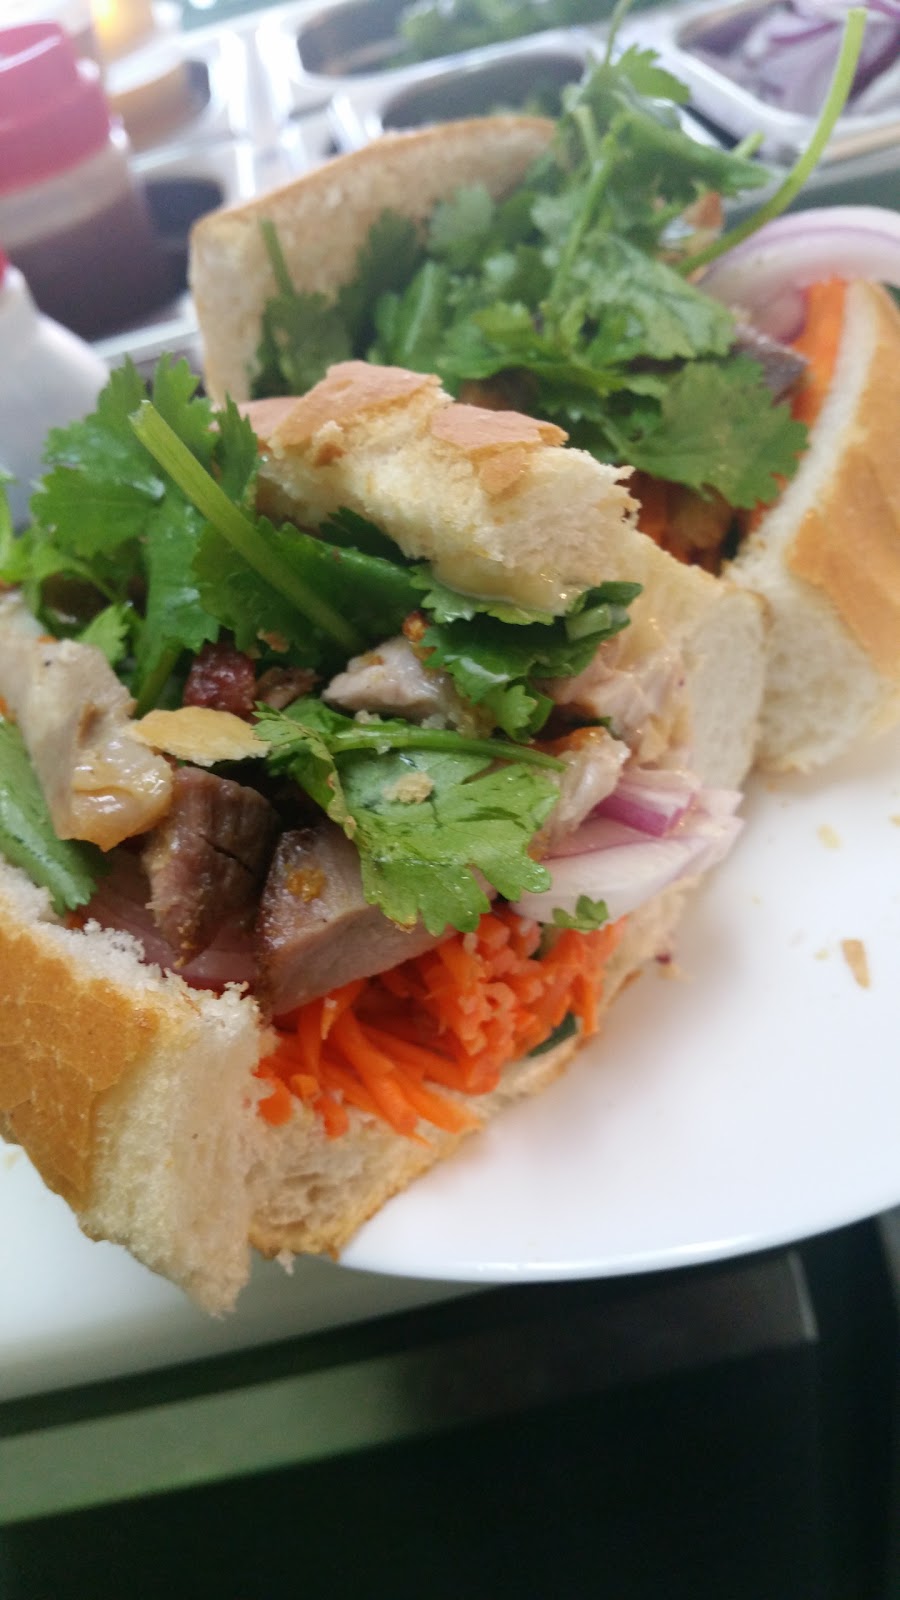 KKY Vietnamese Meat Rolls | restaurant | 6a/34 Henley Beach Rd, Mile End SA 5031, Australia | 0420207720 OR +61 420 207 720